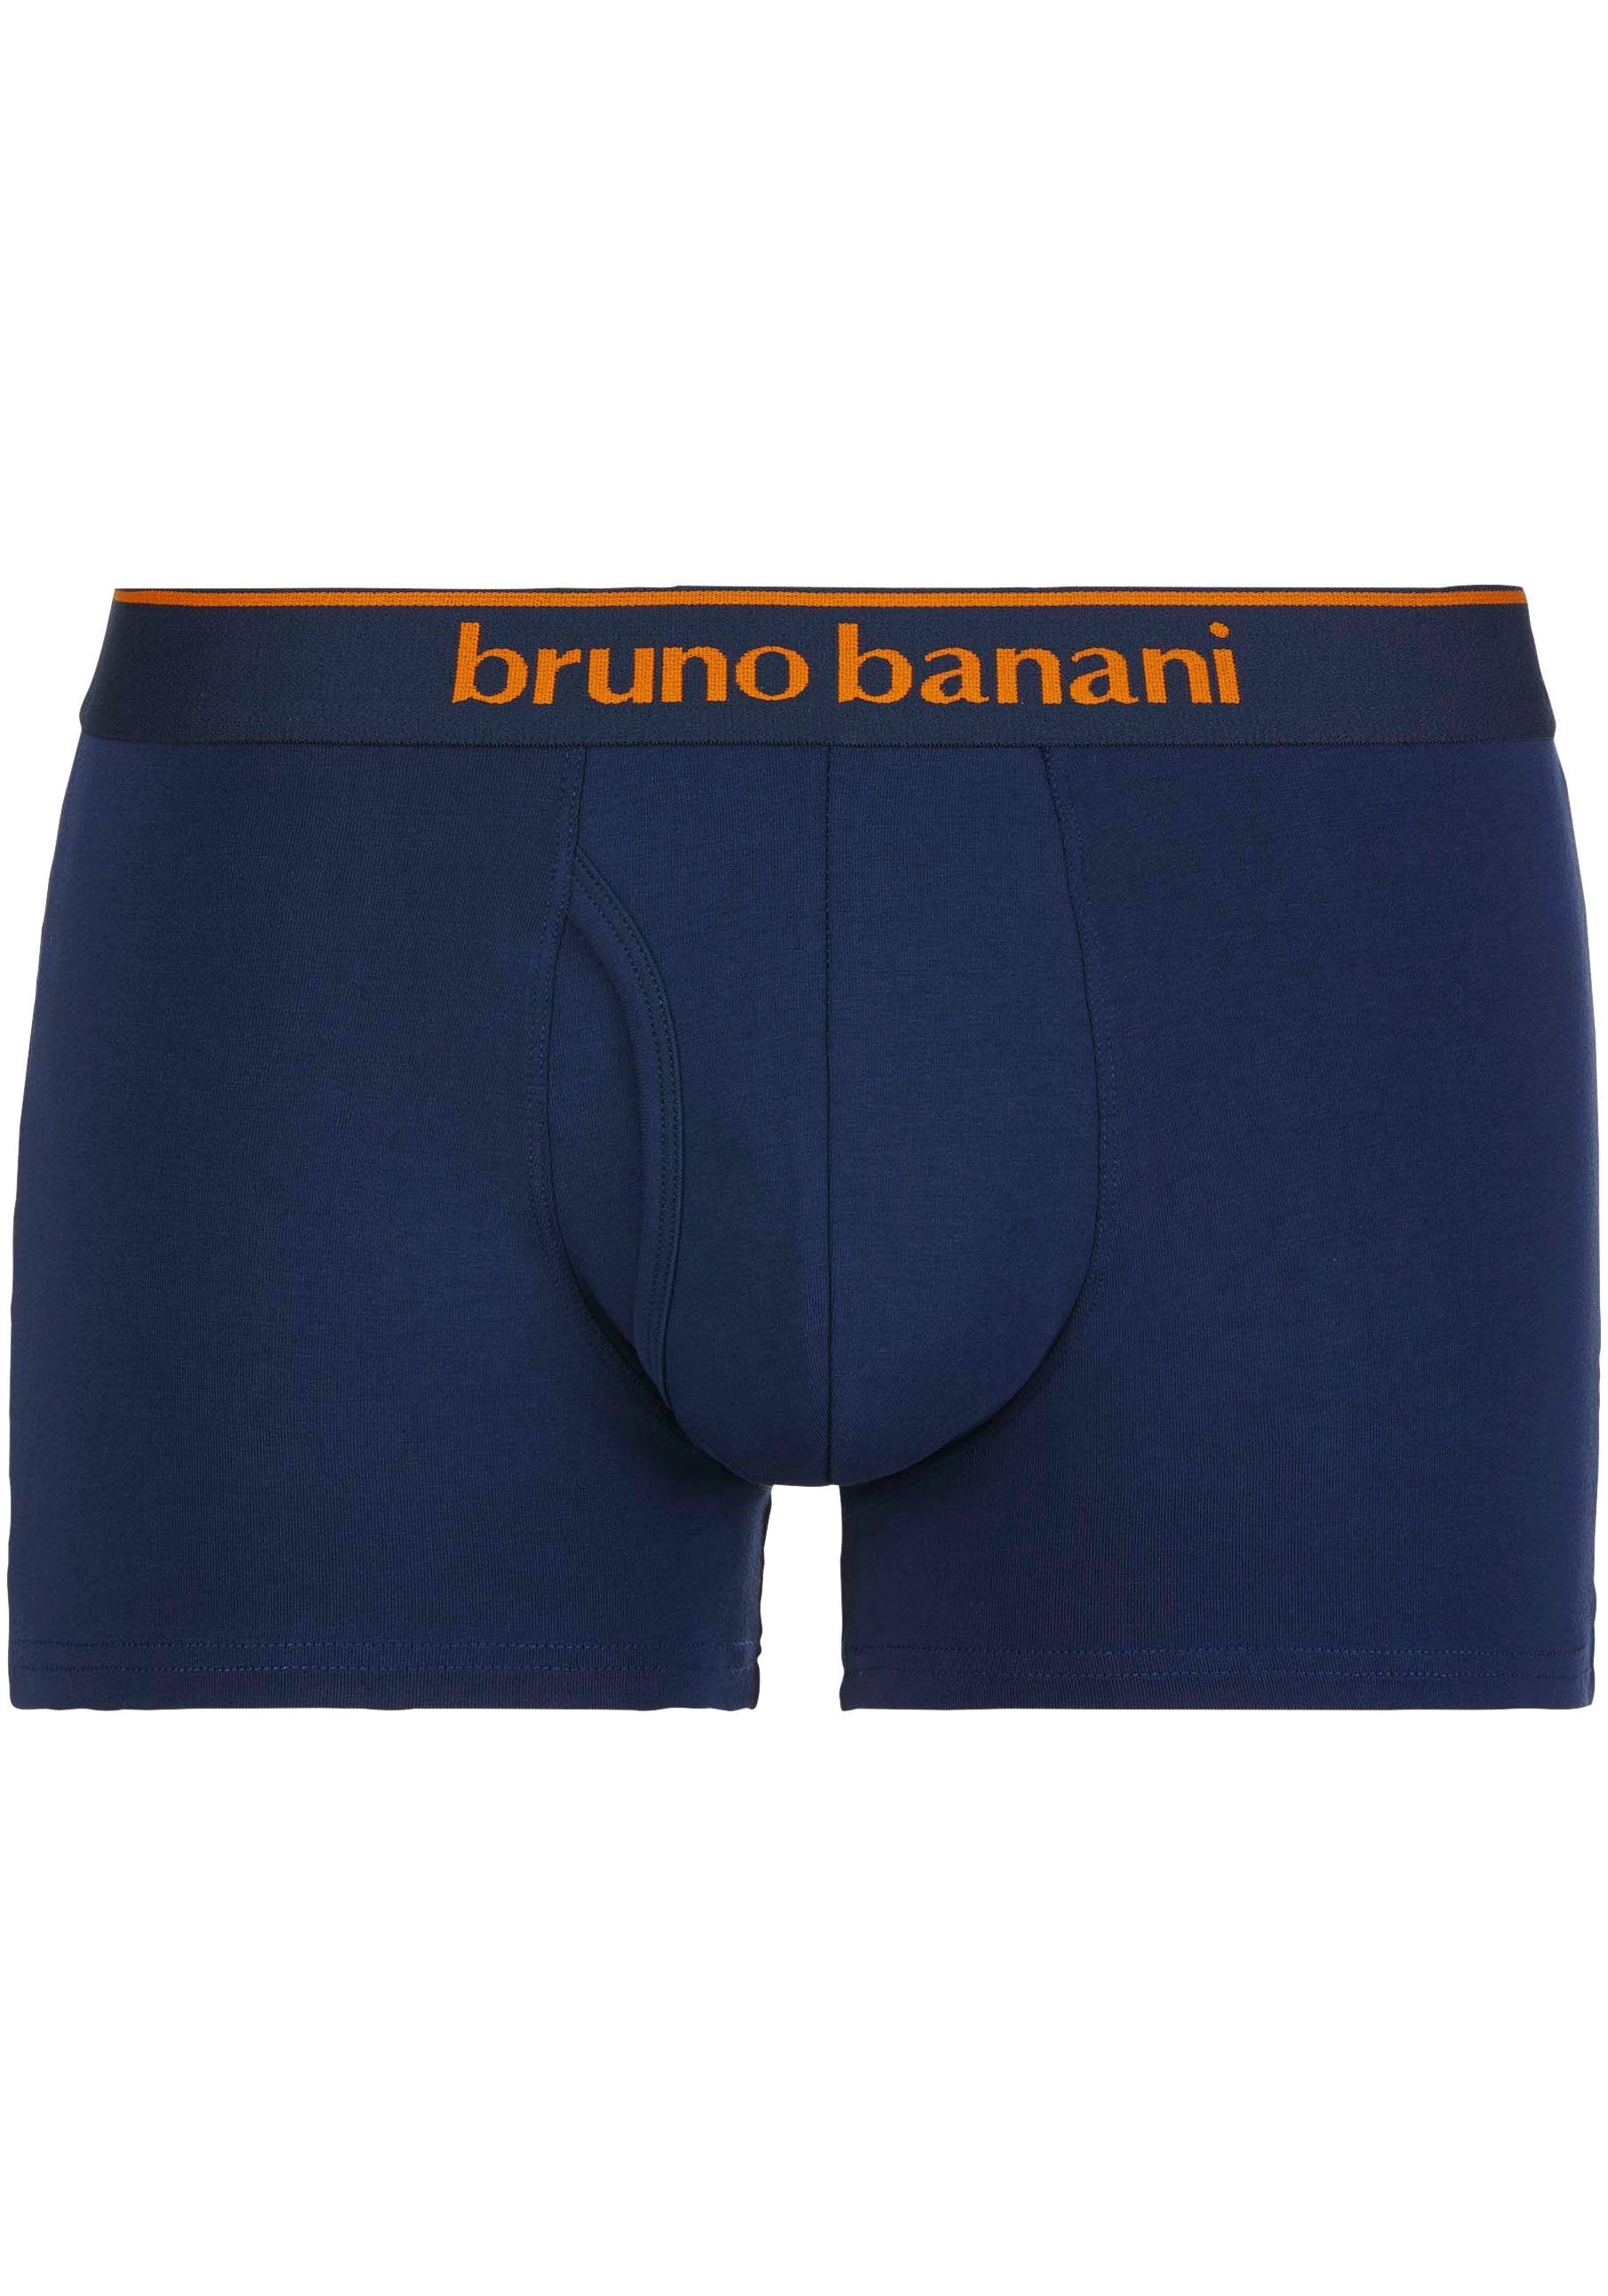 Bruno Banani Boxershorts Access 2Pack (Packung, Quick 2-St) blau-schwarz Kontrastfarbene Details Short